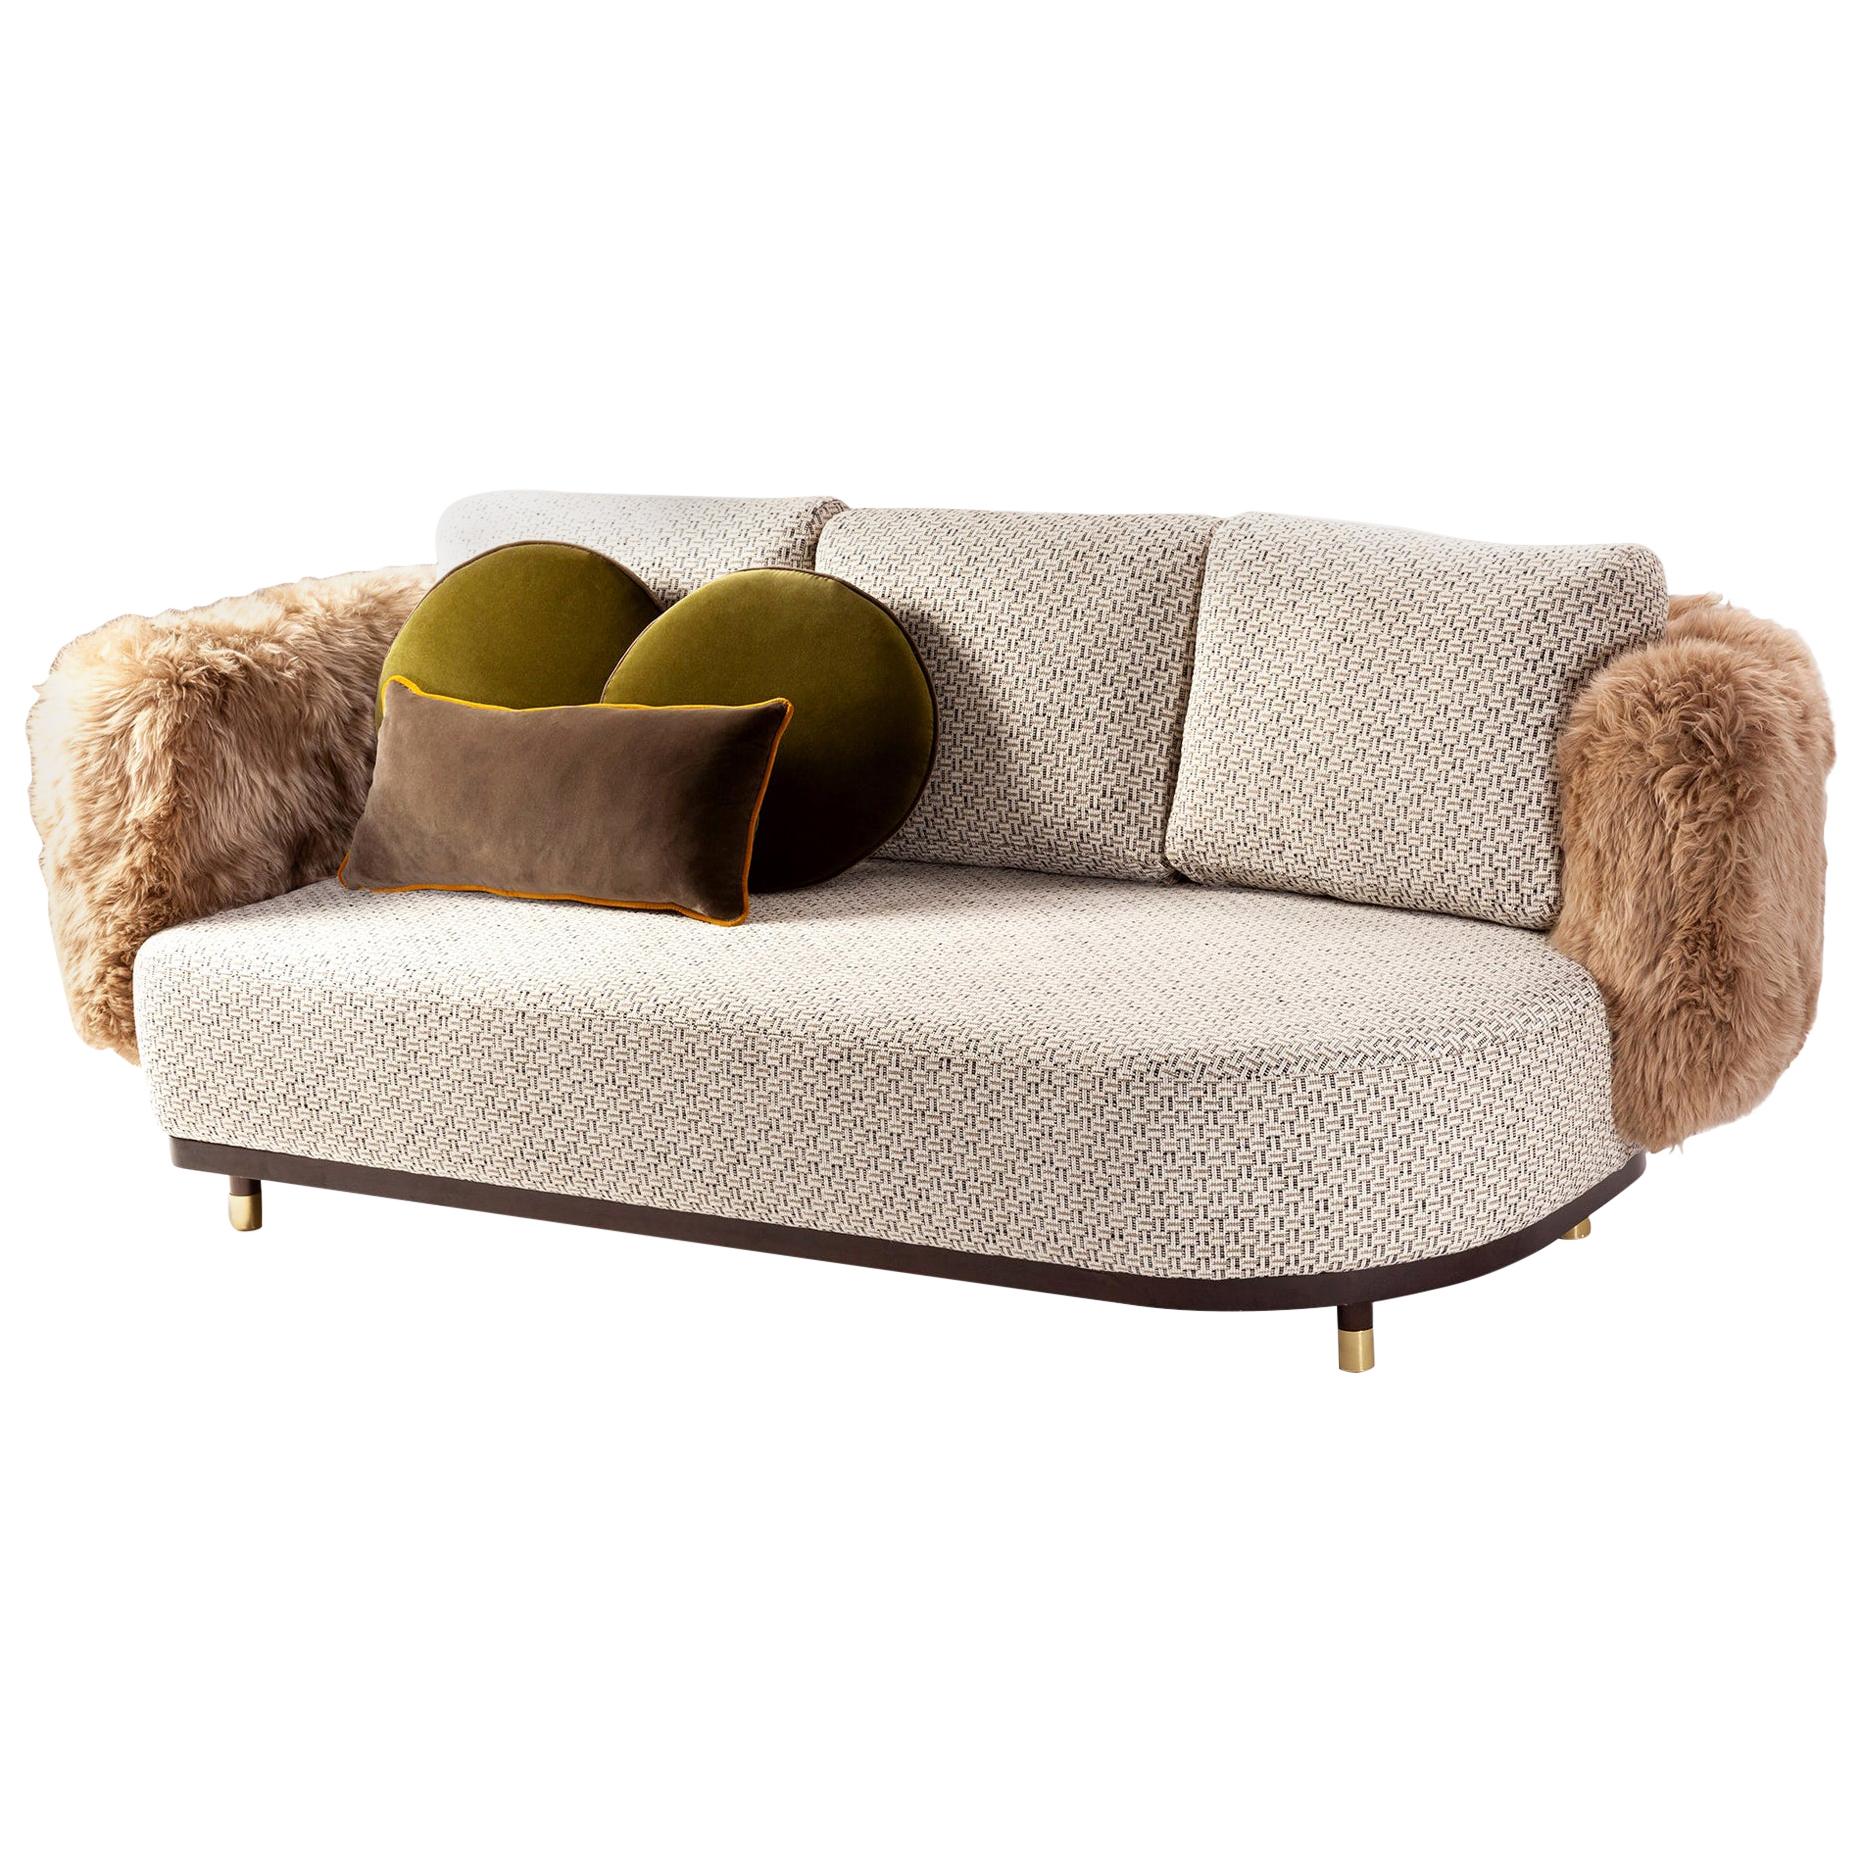 DOOQ Sofa Settee with Weaved Texture and Lamb Fur Single Man, width 280